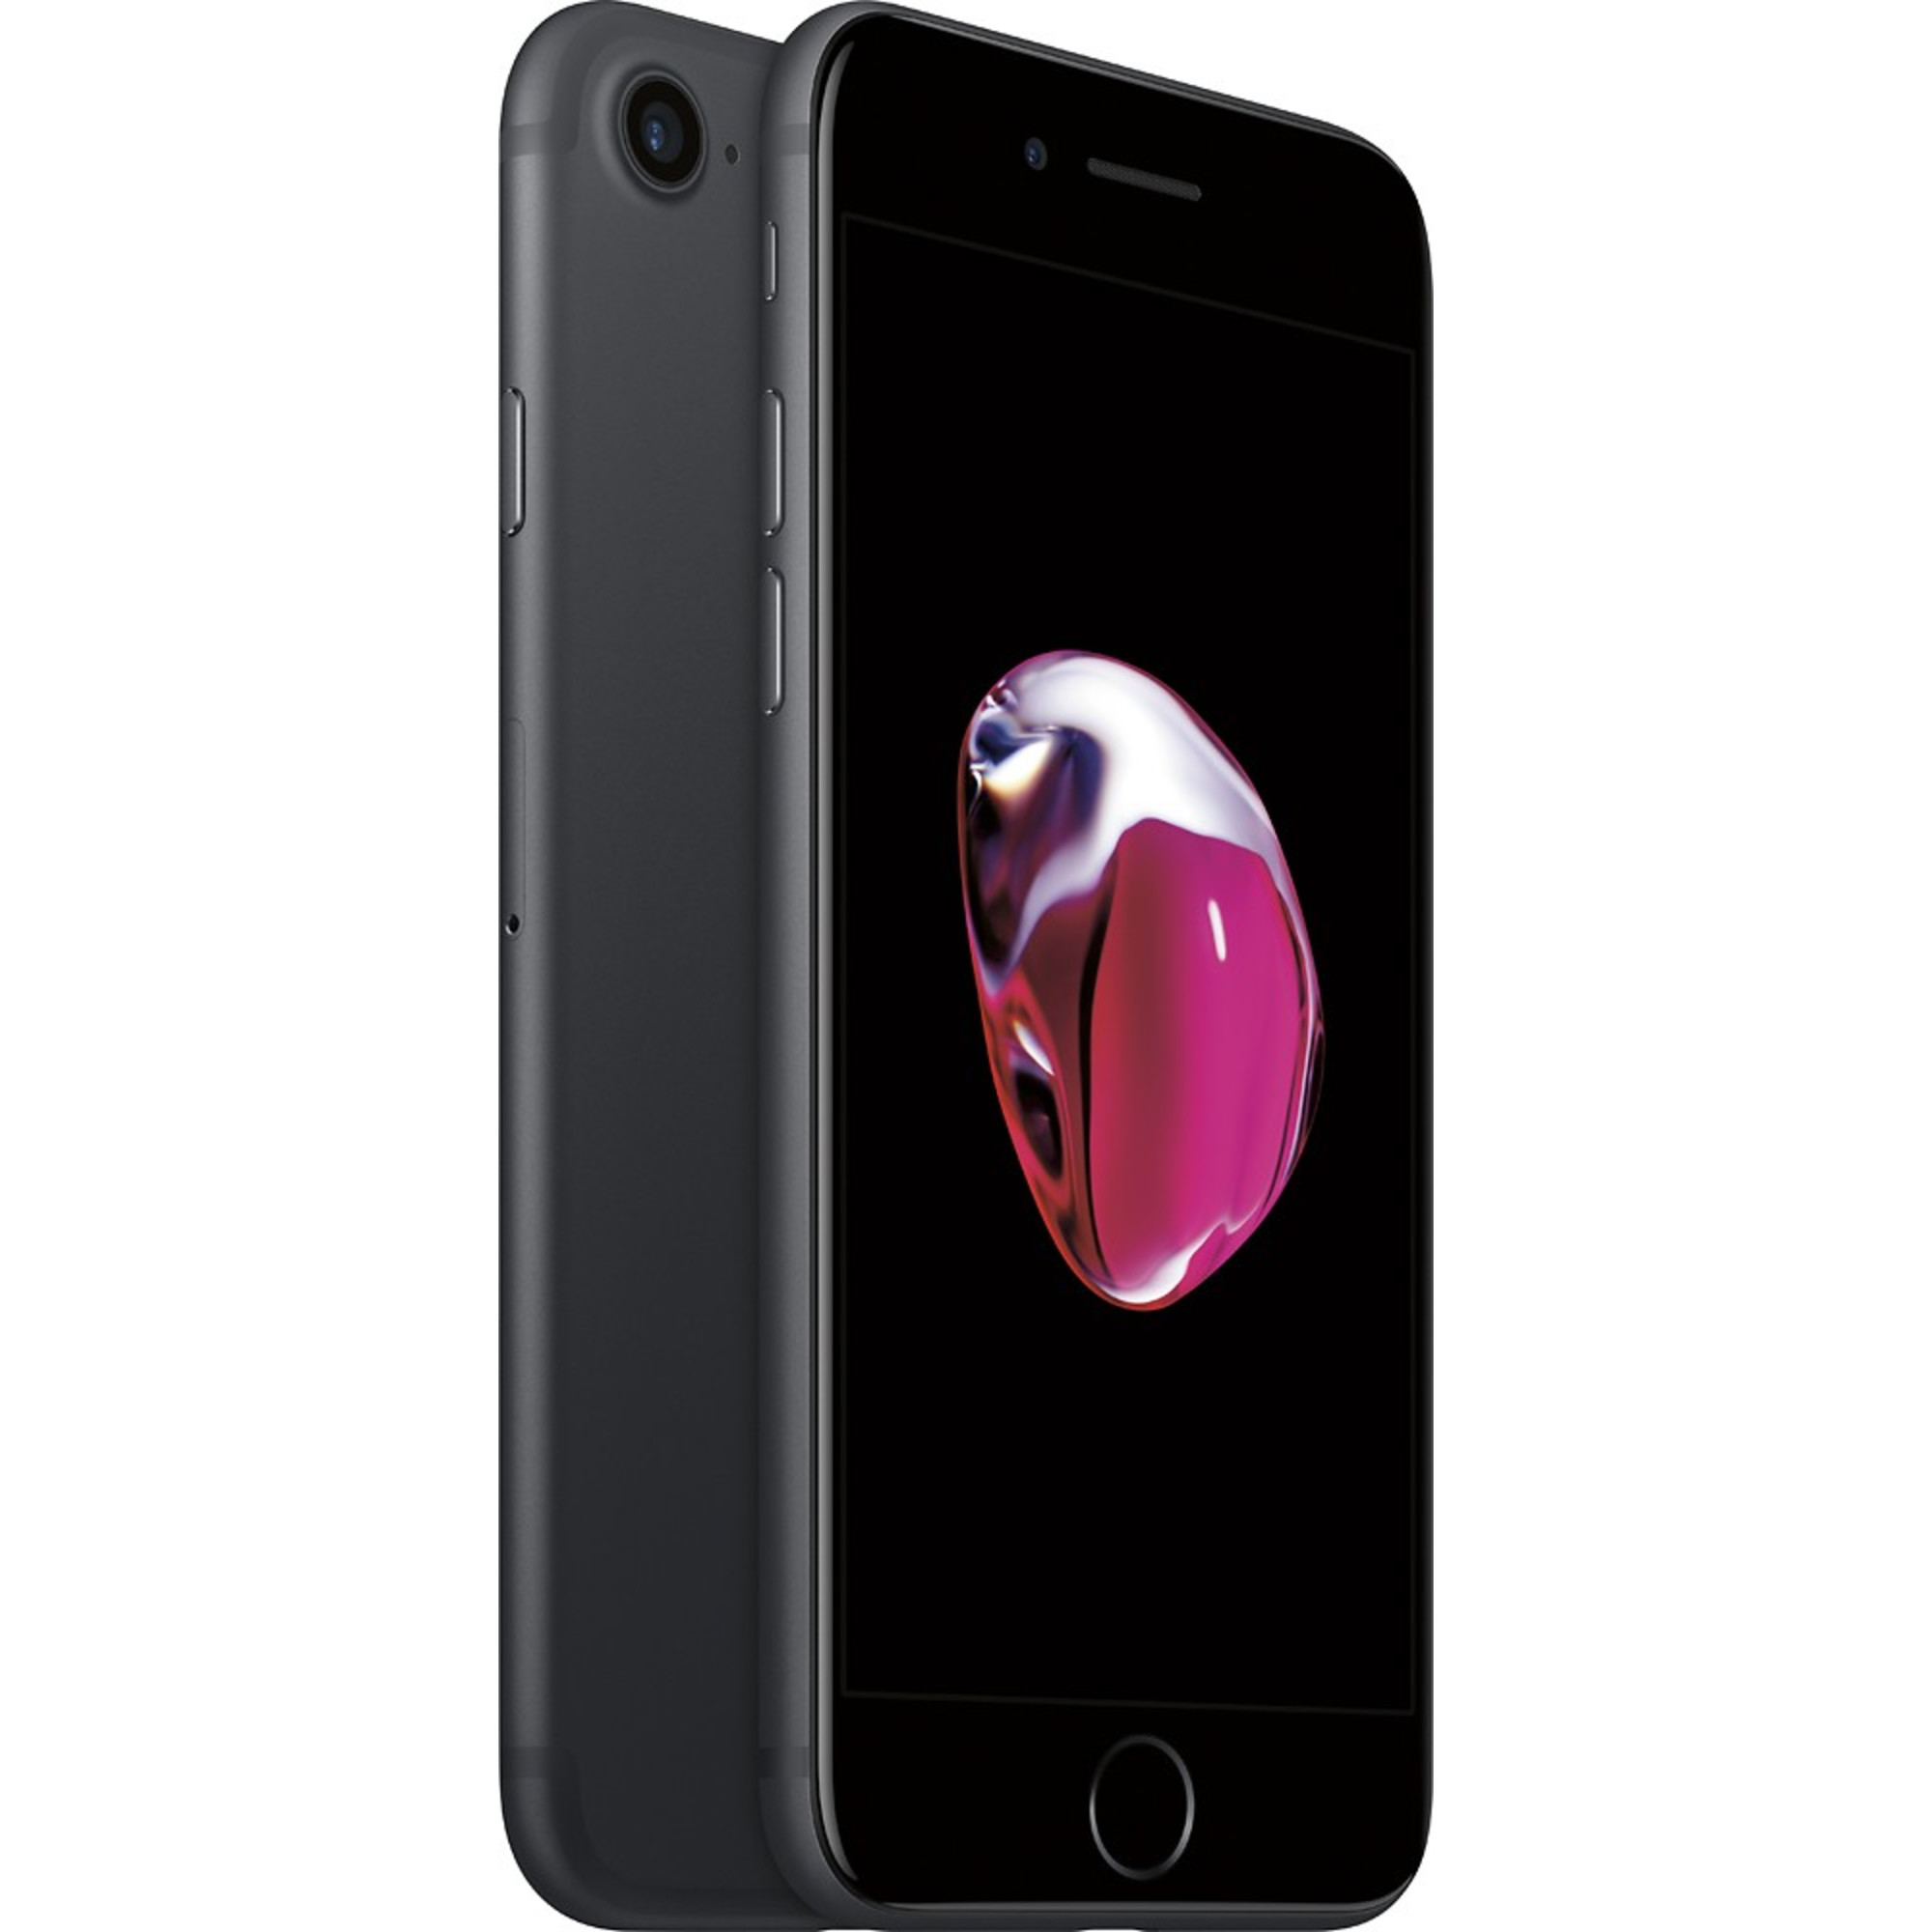 Apple iPhone 7 256GB Unlocked GSM Quad-Core 12MP Phone (Certified Refurbished) | eBay